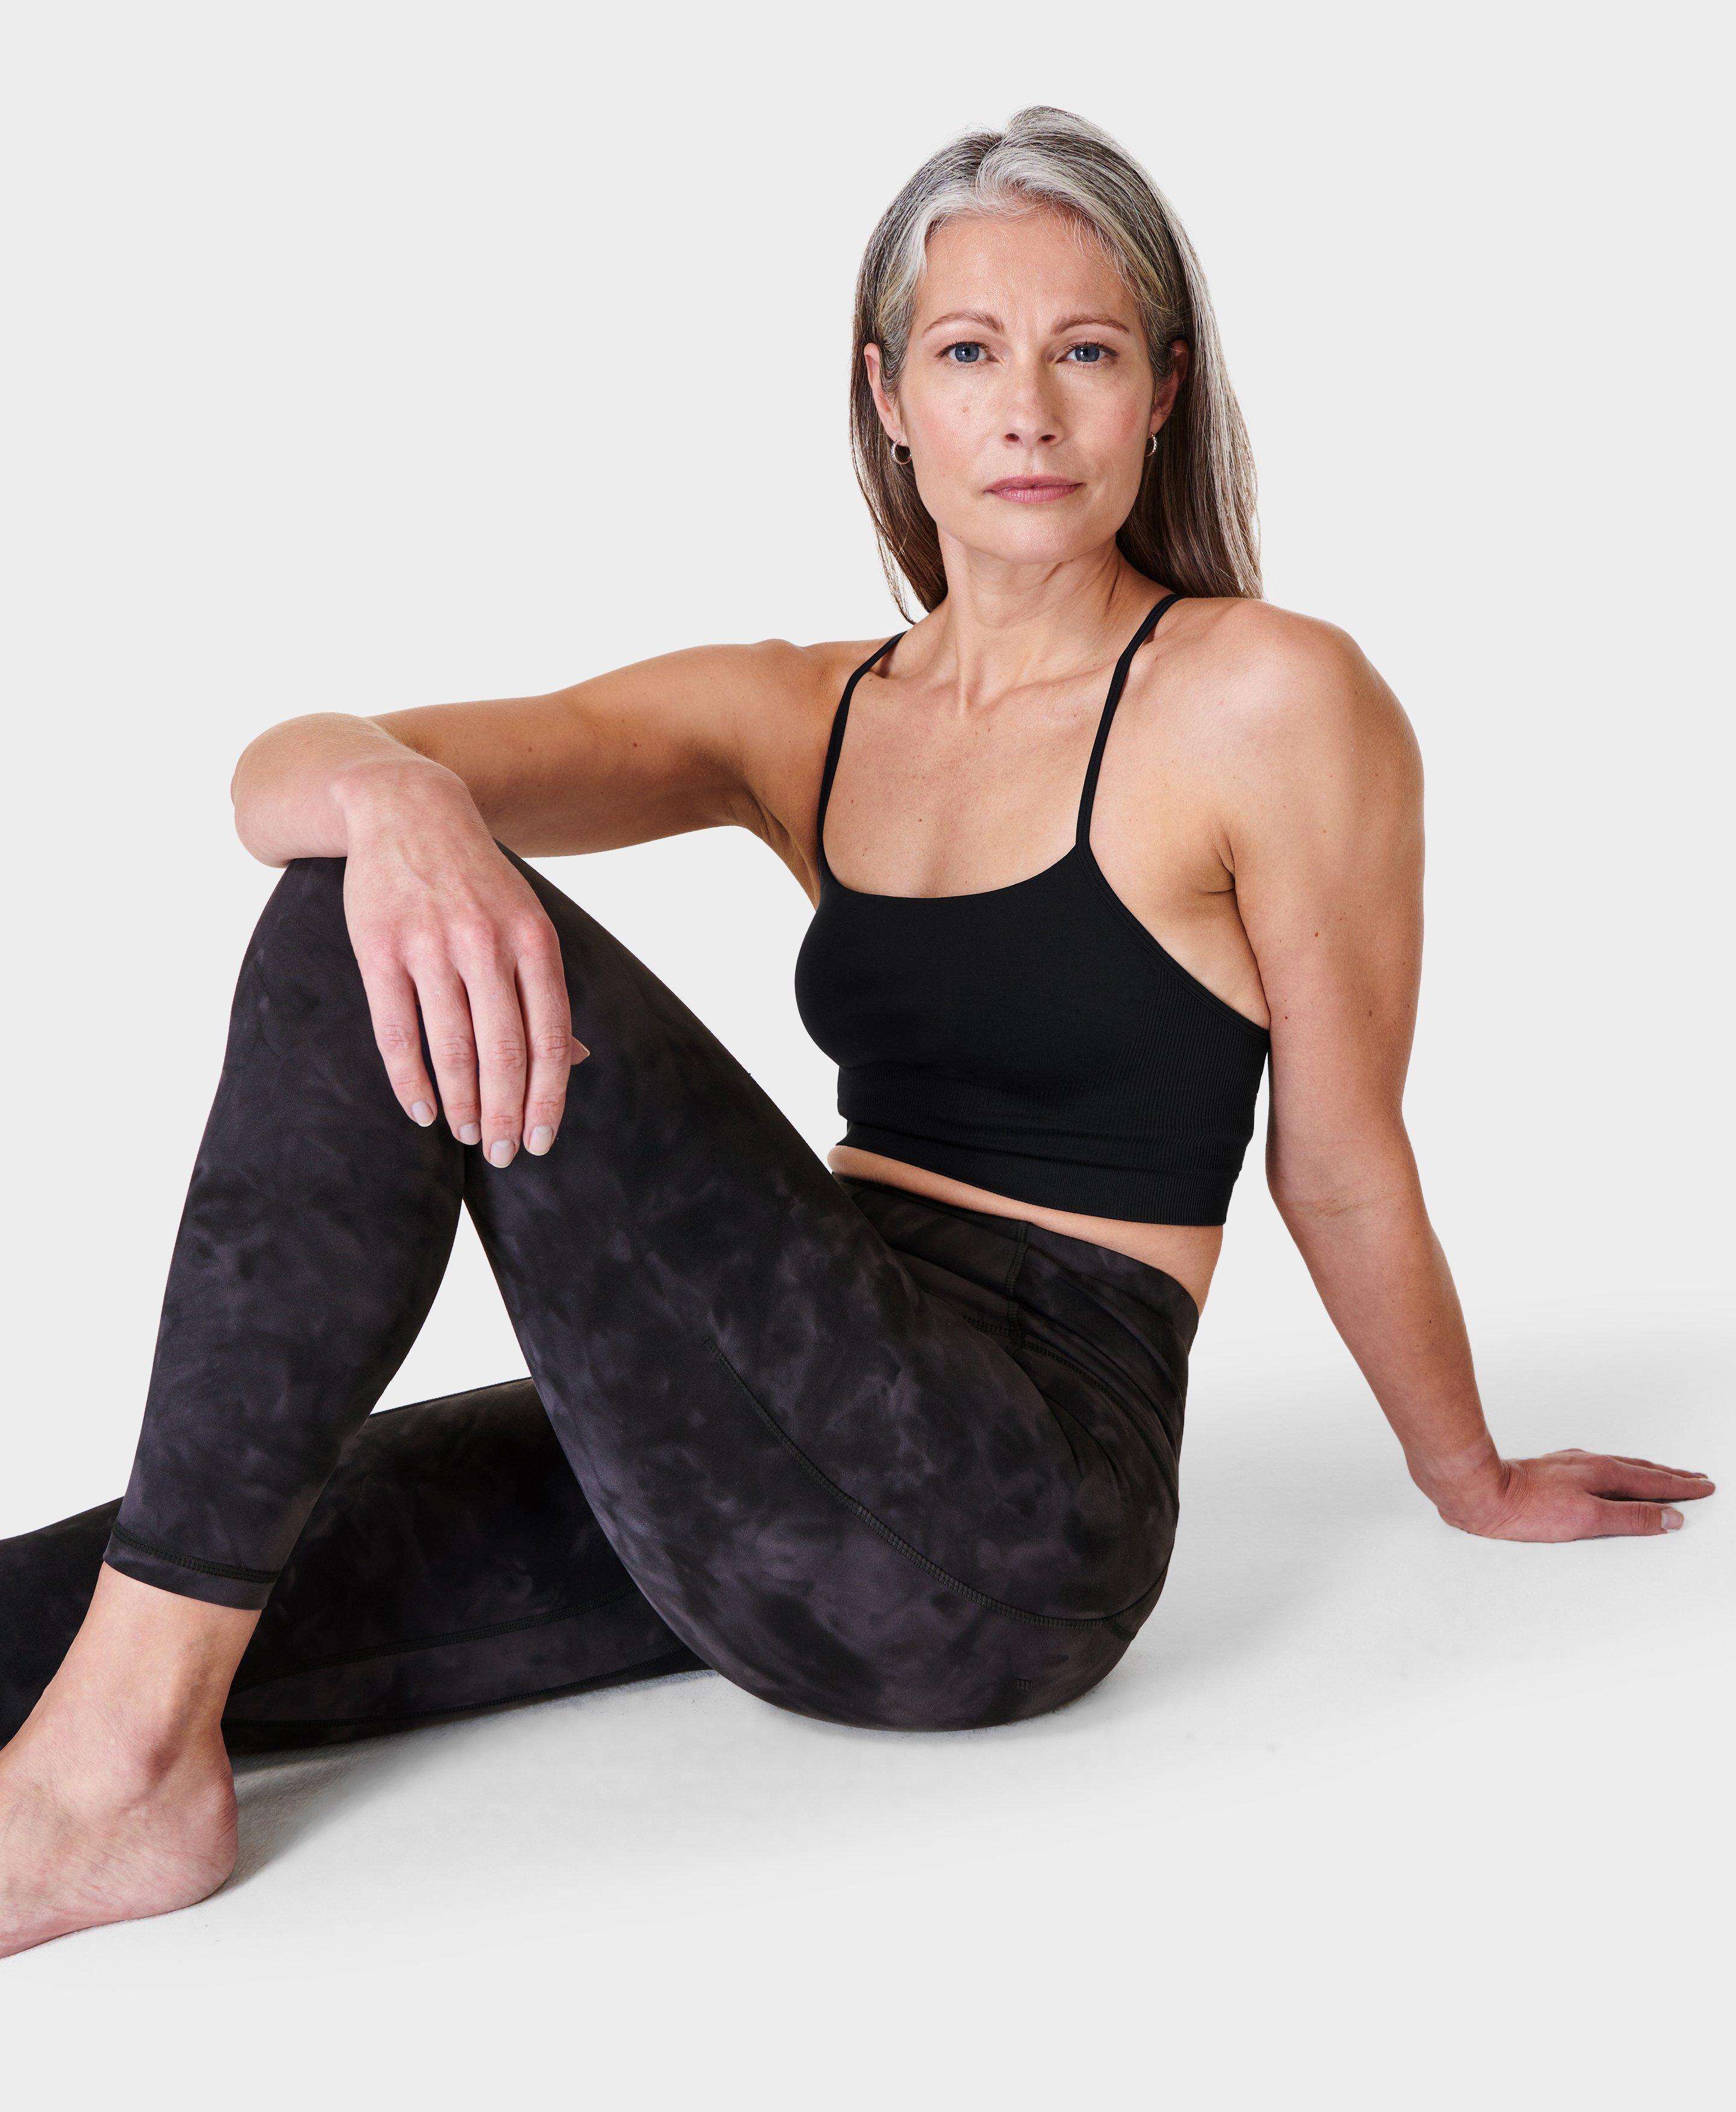 Buy Sweaty Betty Super Soft Reversible Yoga Bra - Grey At 41% Off